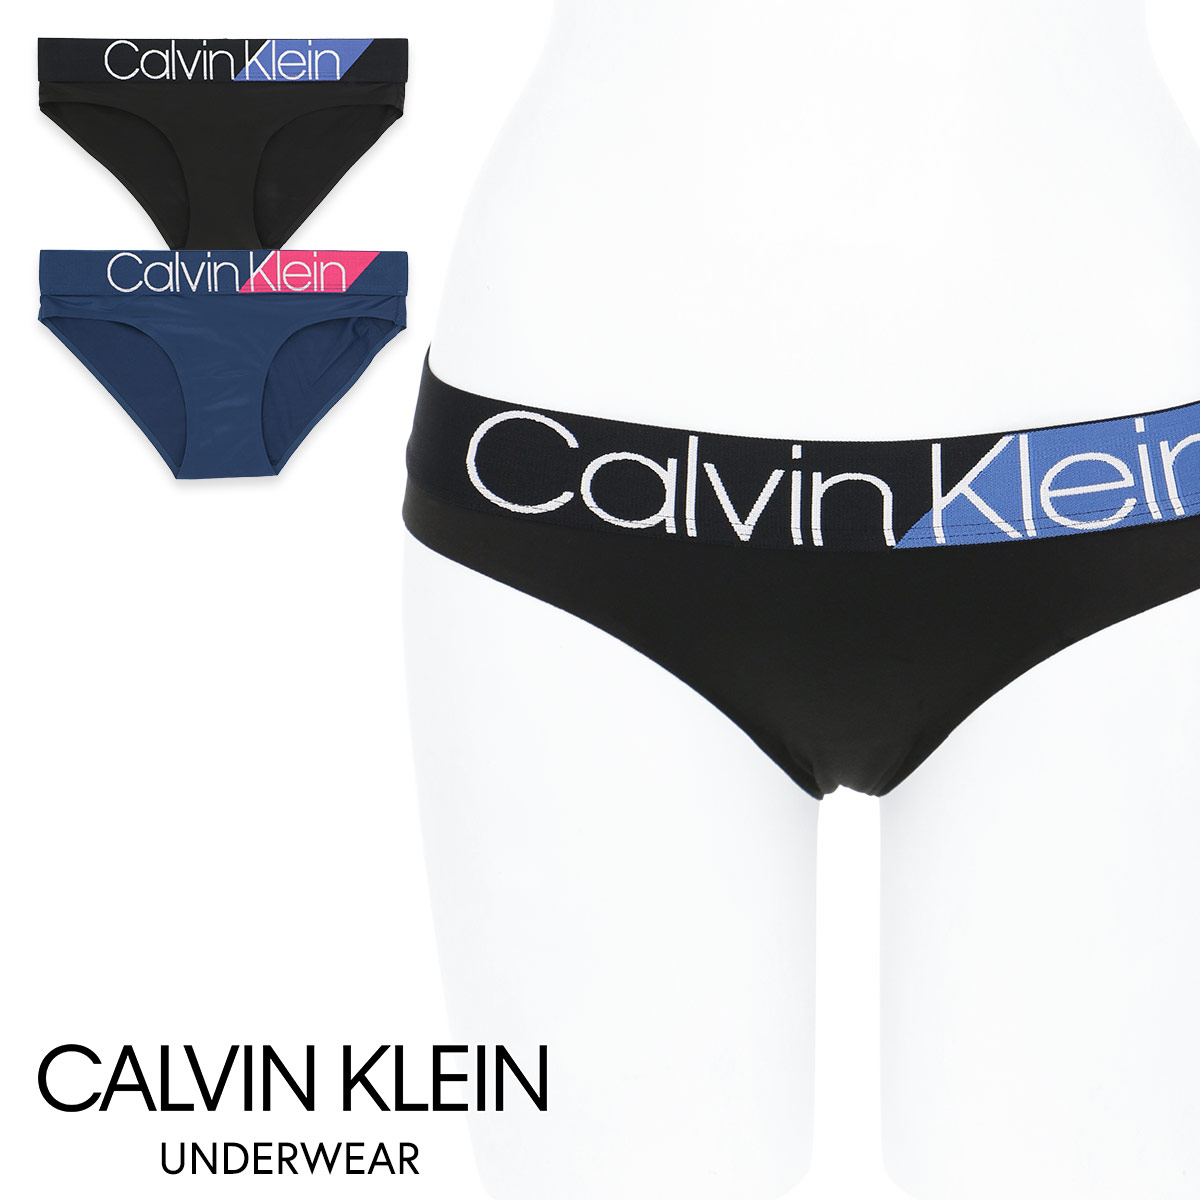 women's underwear like calvin klein